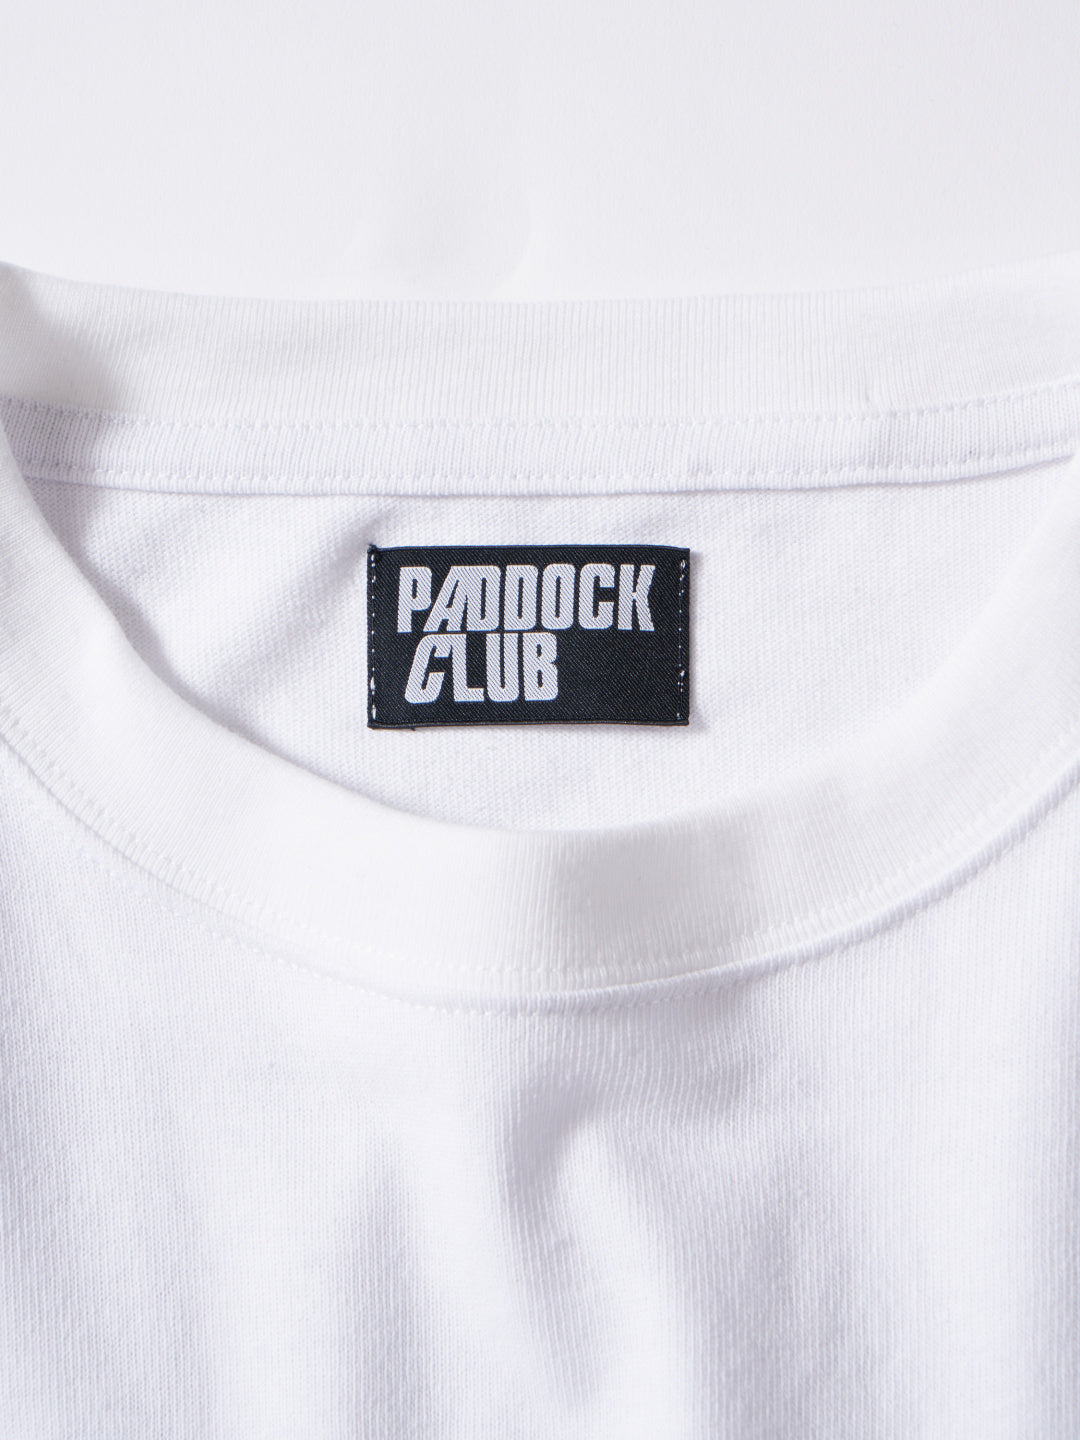 PADDOCK CLUB | PC LOGO TEE - White